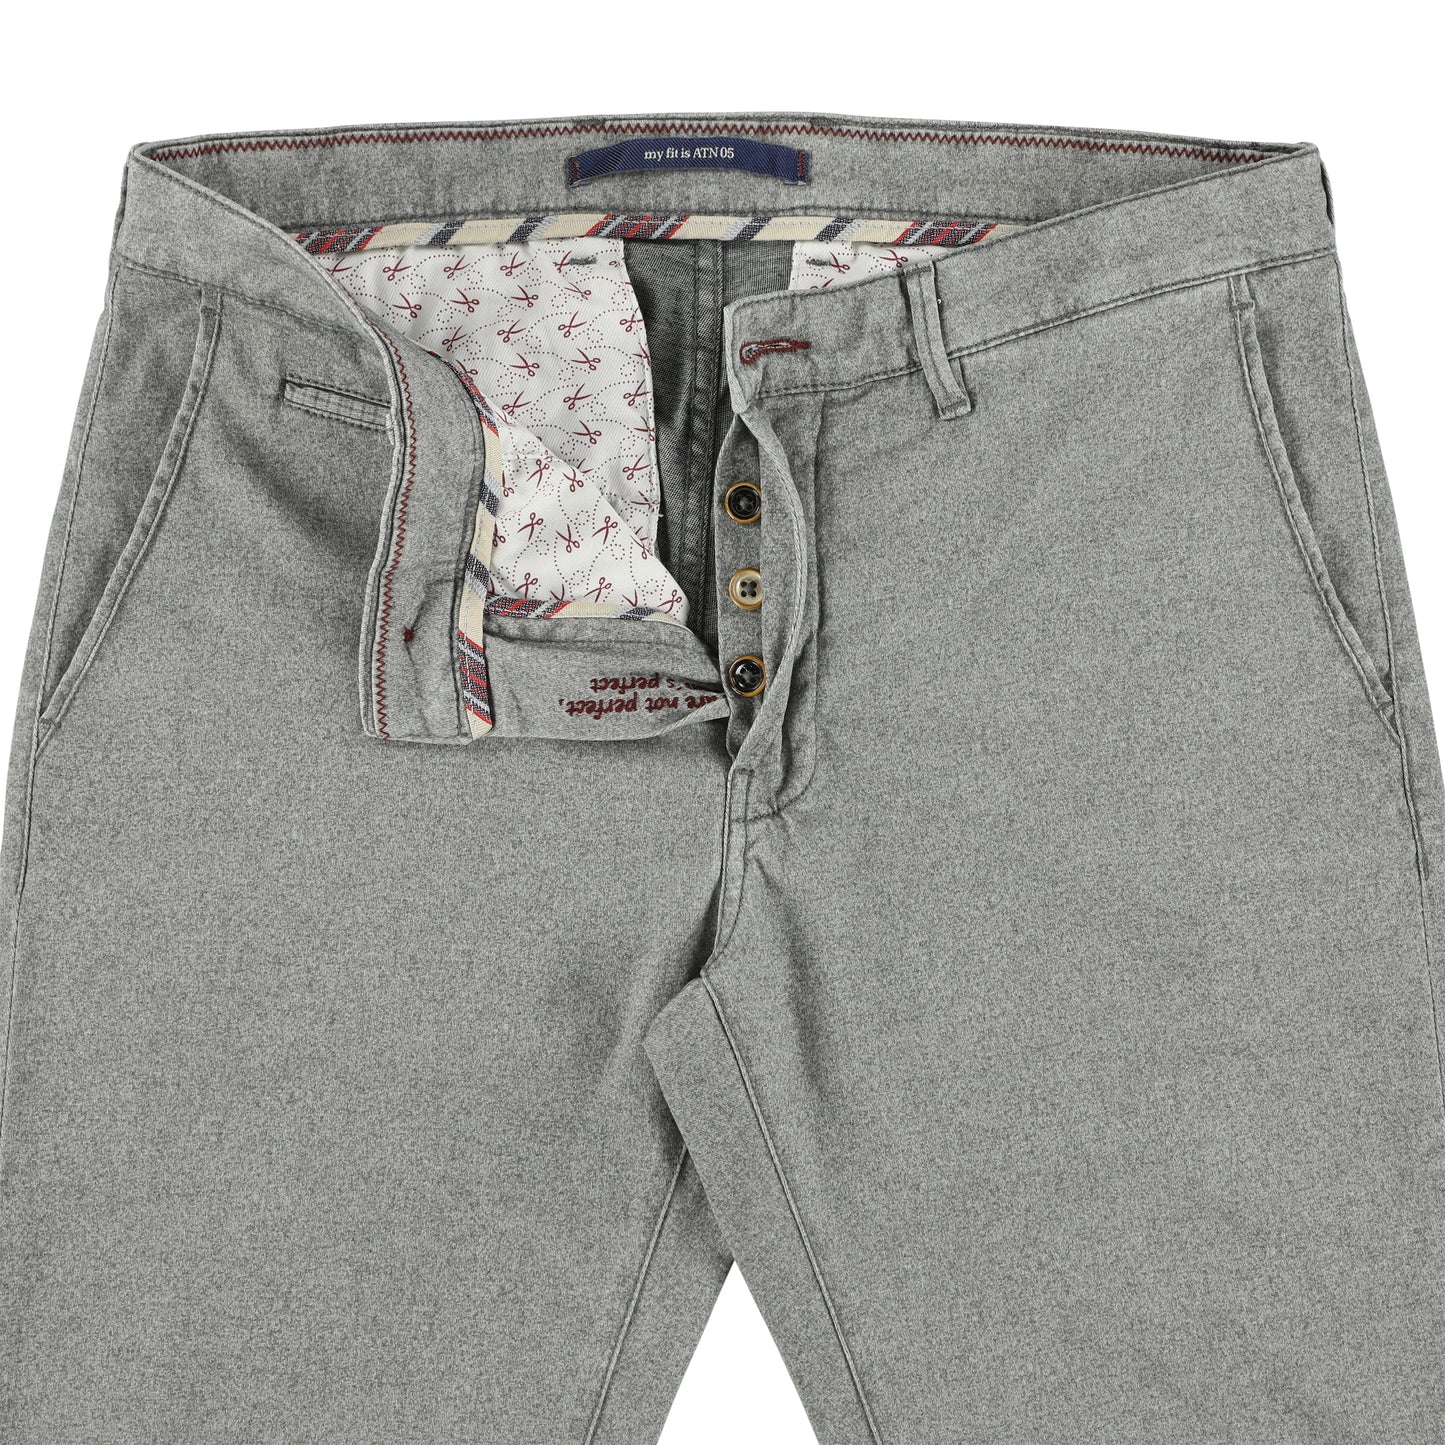 Grey cotton slim fit trousers Atelier Noterman - 1727/710